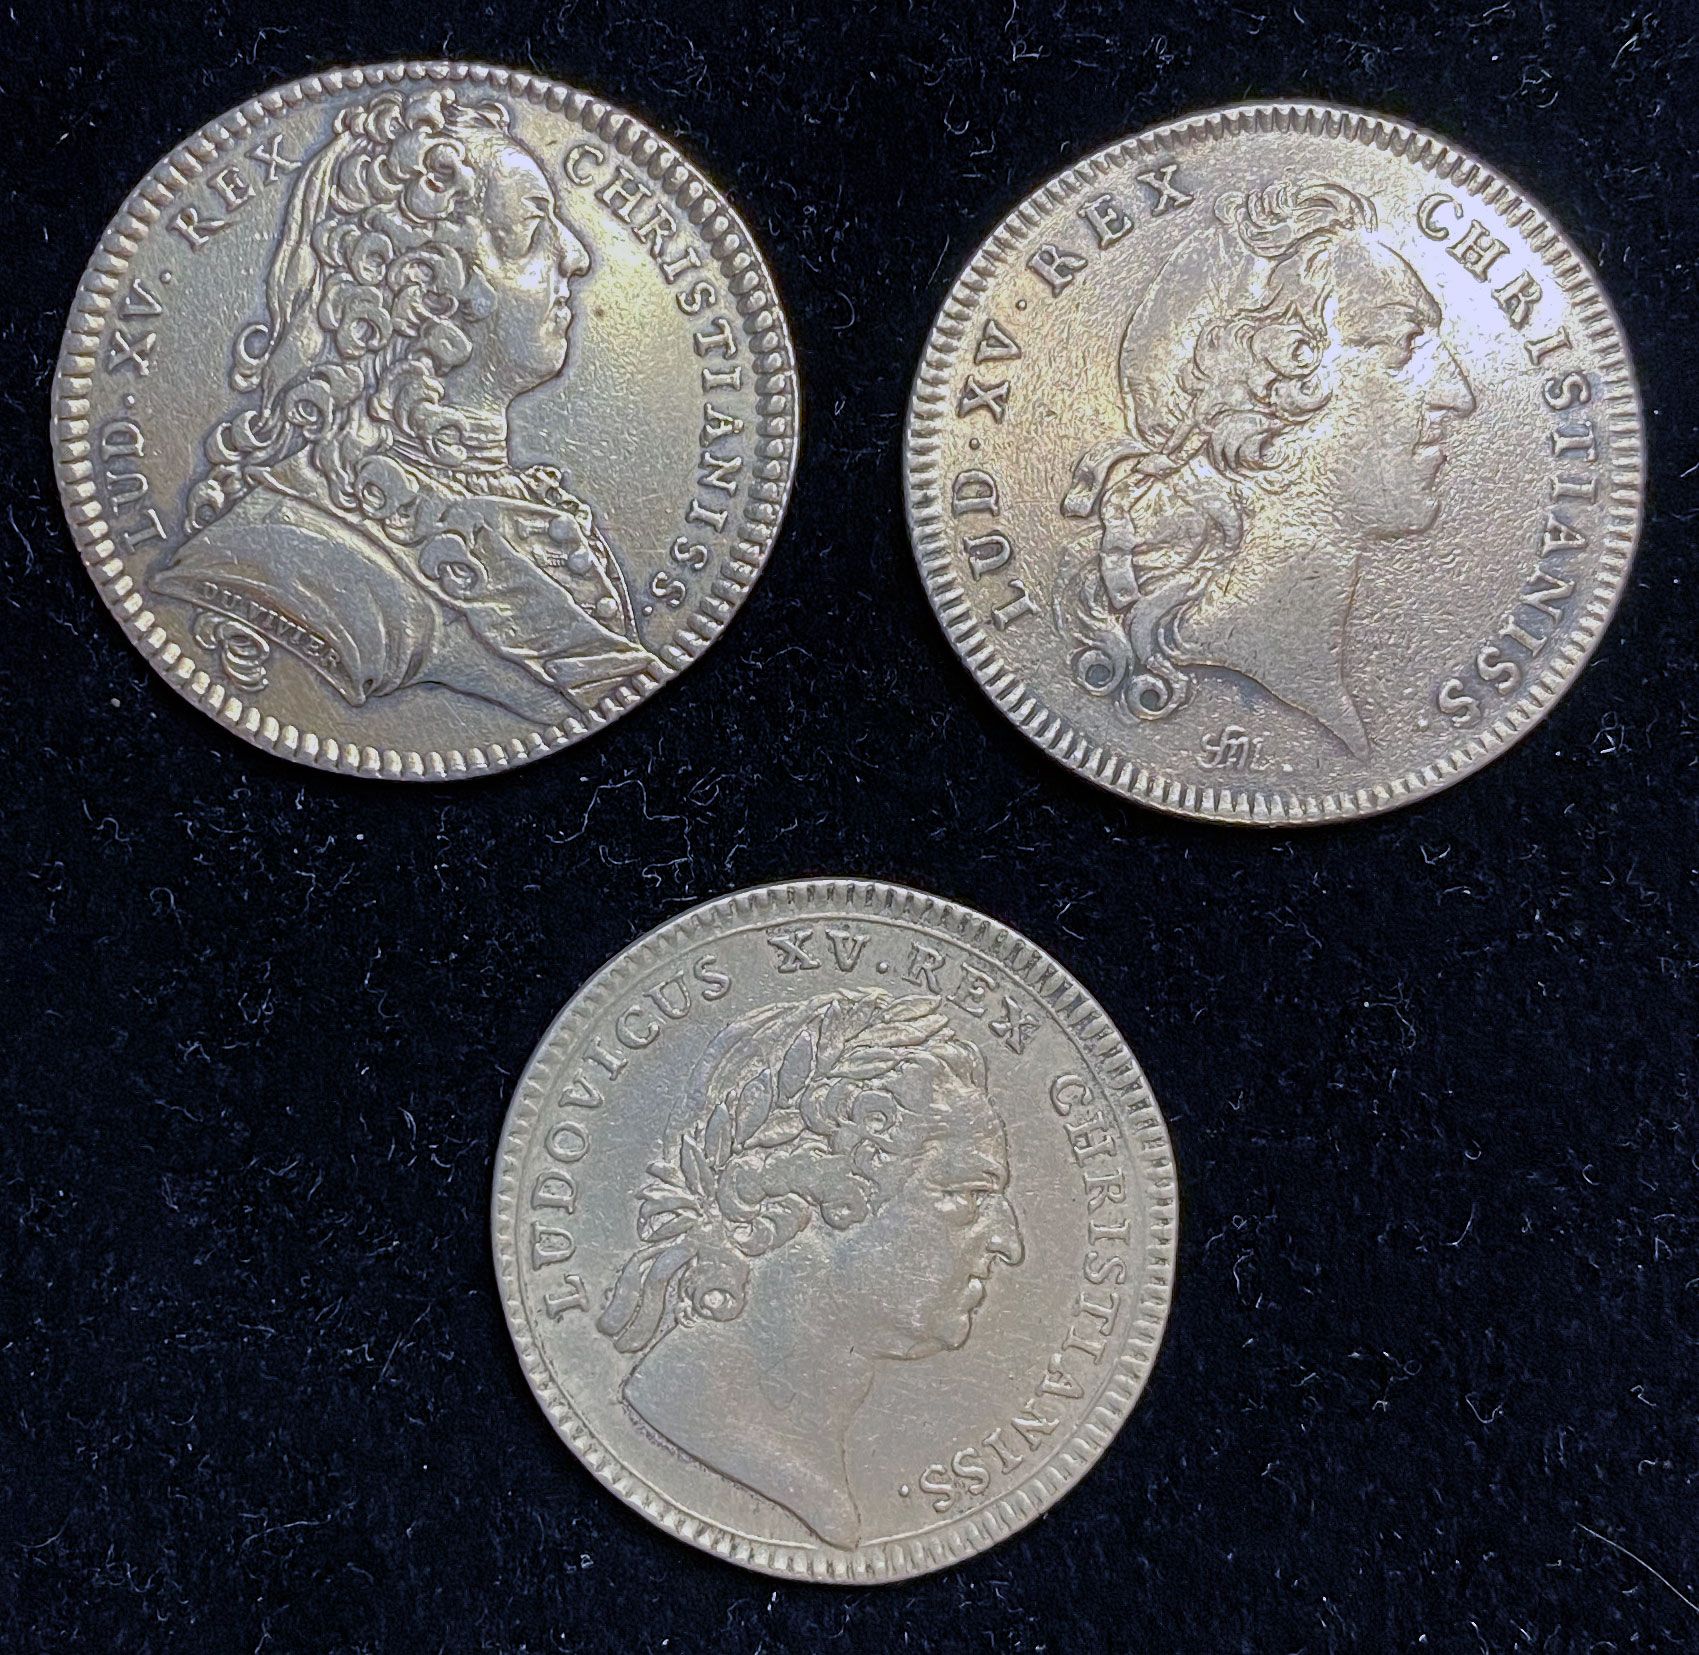 Null 圣路易勋章，两枚银质令牌，右边是路易十五的轮廓，其中一枚身着习惯和围巾，署名杜维耶，一枚是裸露的半身像，署名FM，"LUD.XV.REX CHRIST&hellip;